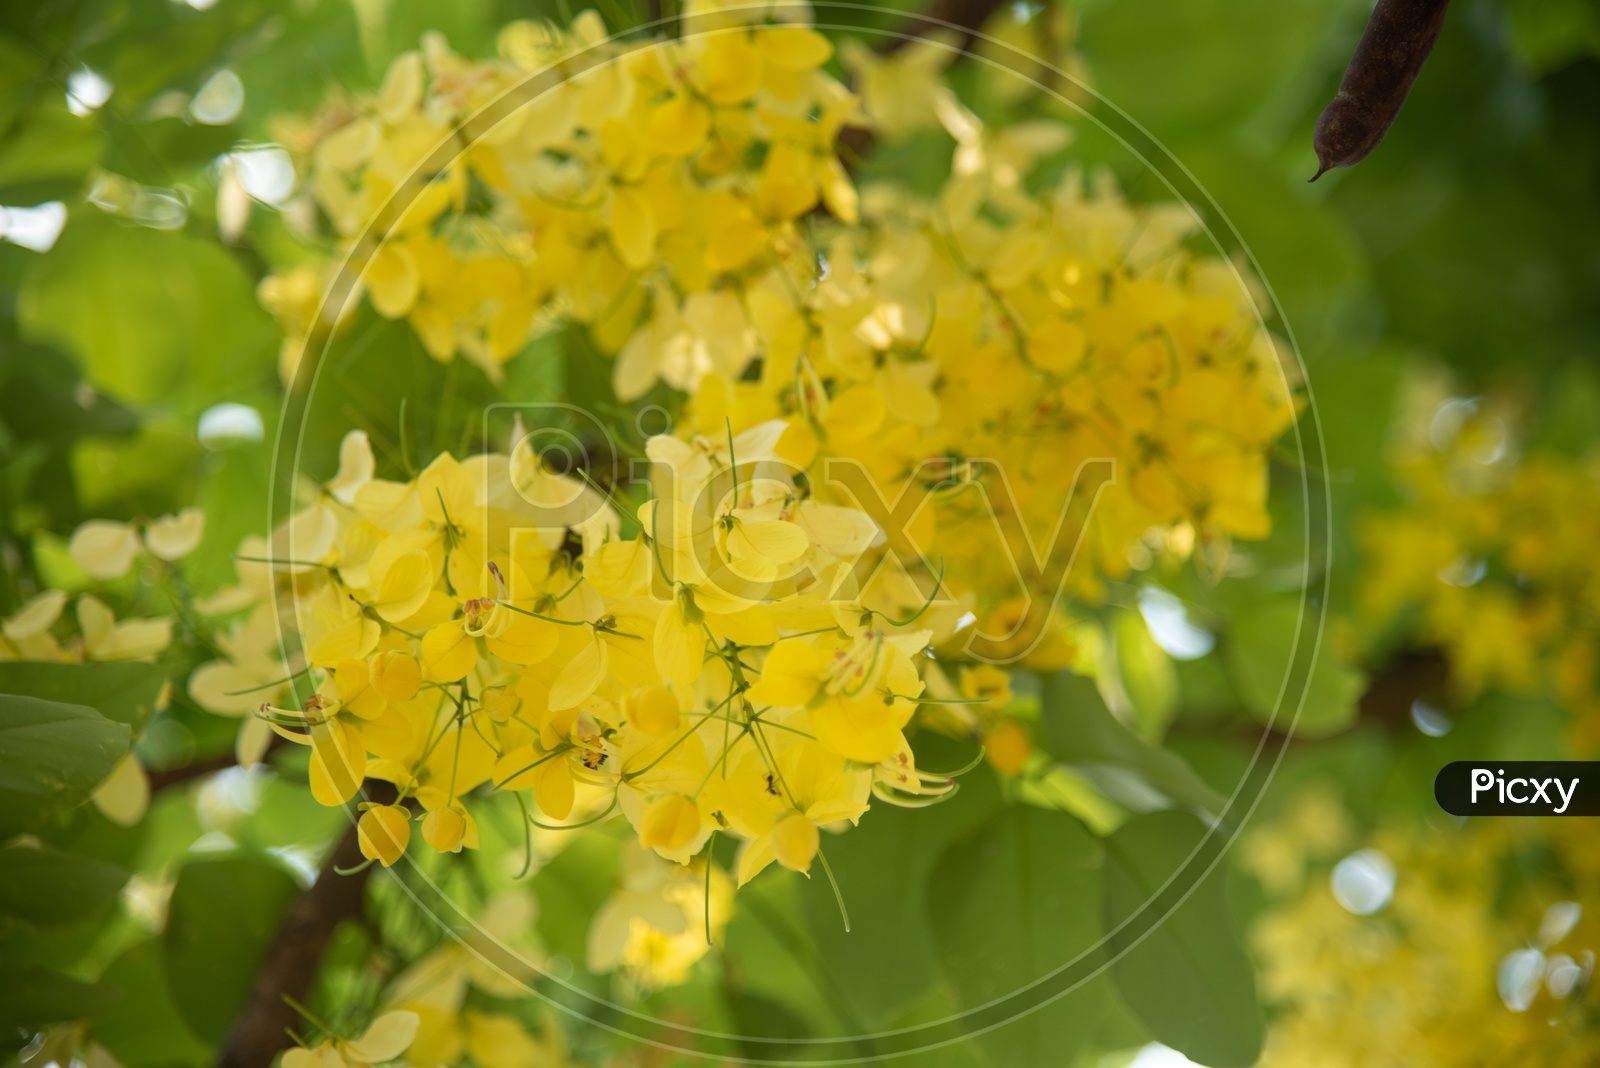 Golden Shower Or Cassia Fistula Flowers On a tree